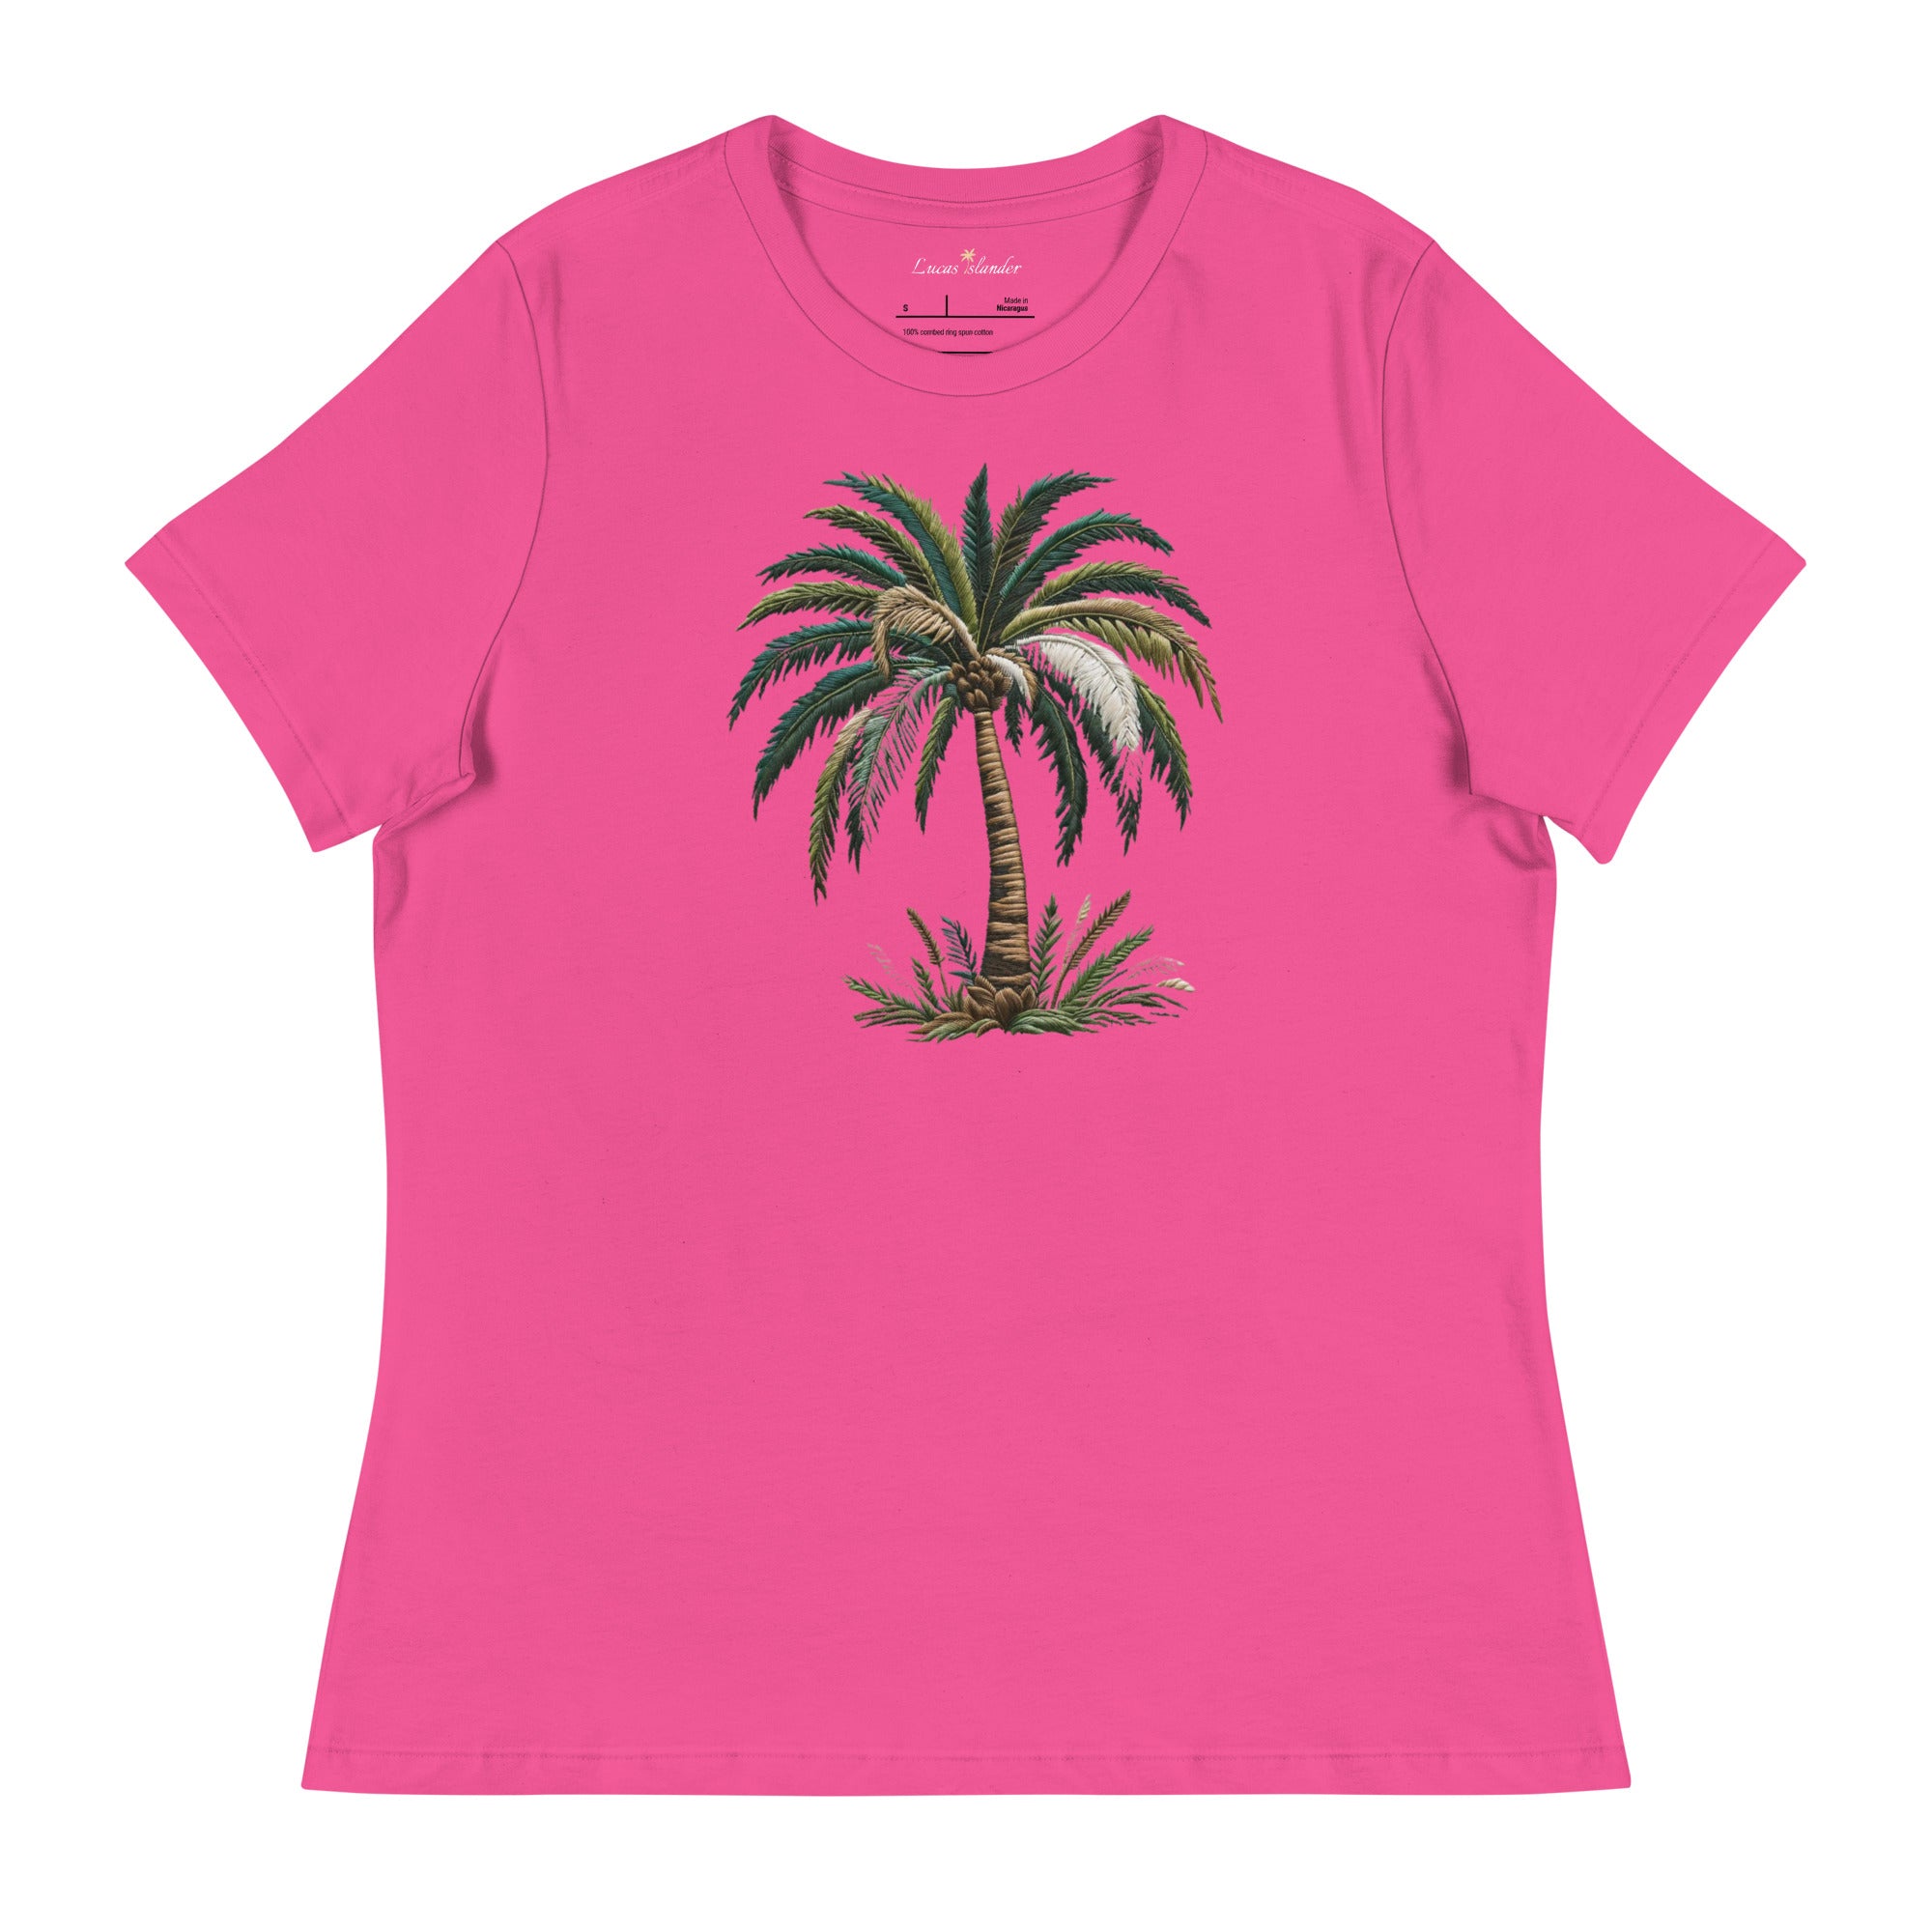 Unwind in Paradise: Lucas Islander's Palm Tree T-Shirt Women's Relaxed T-Shirt